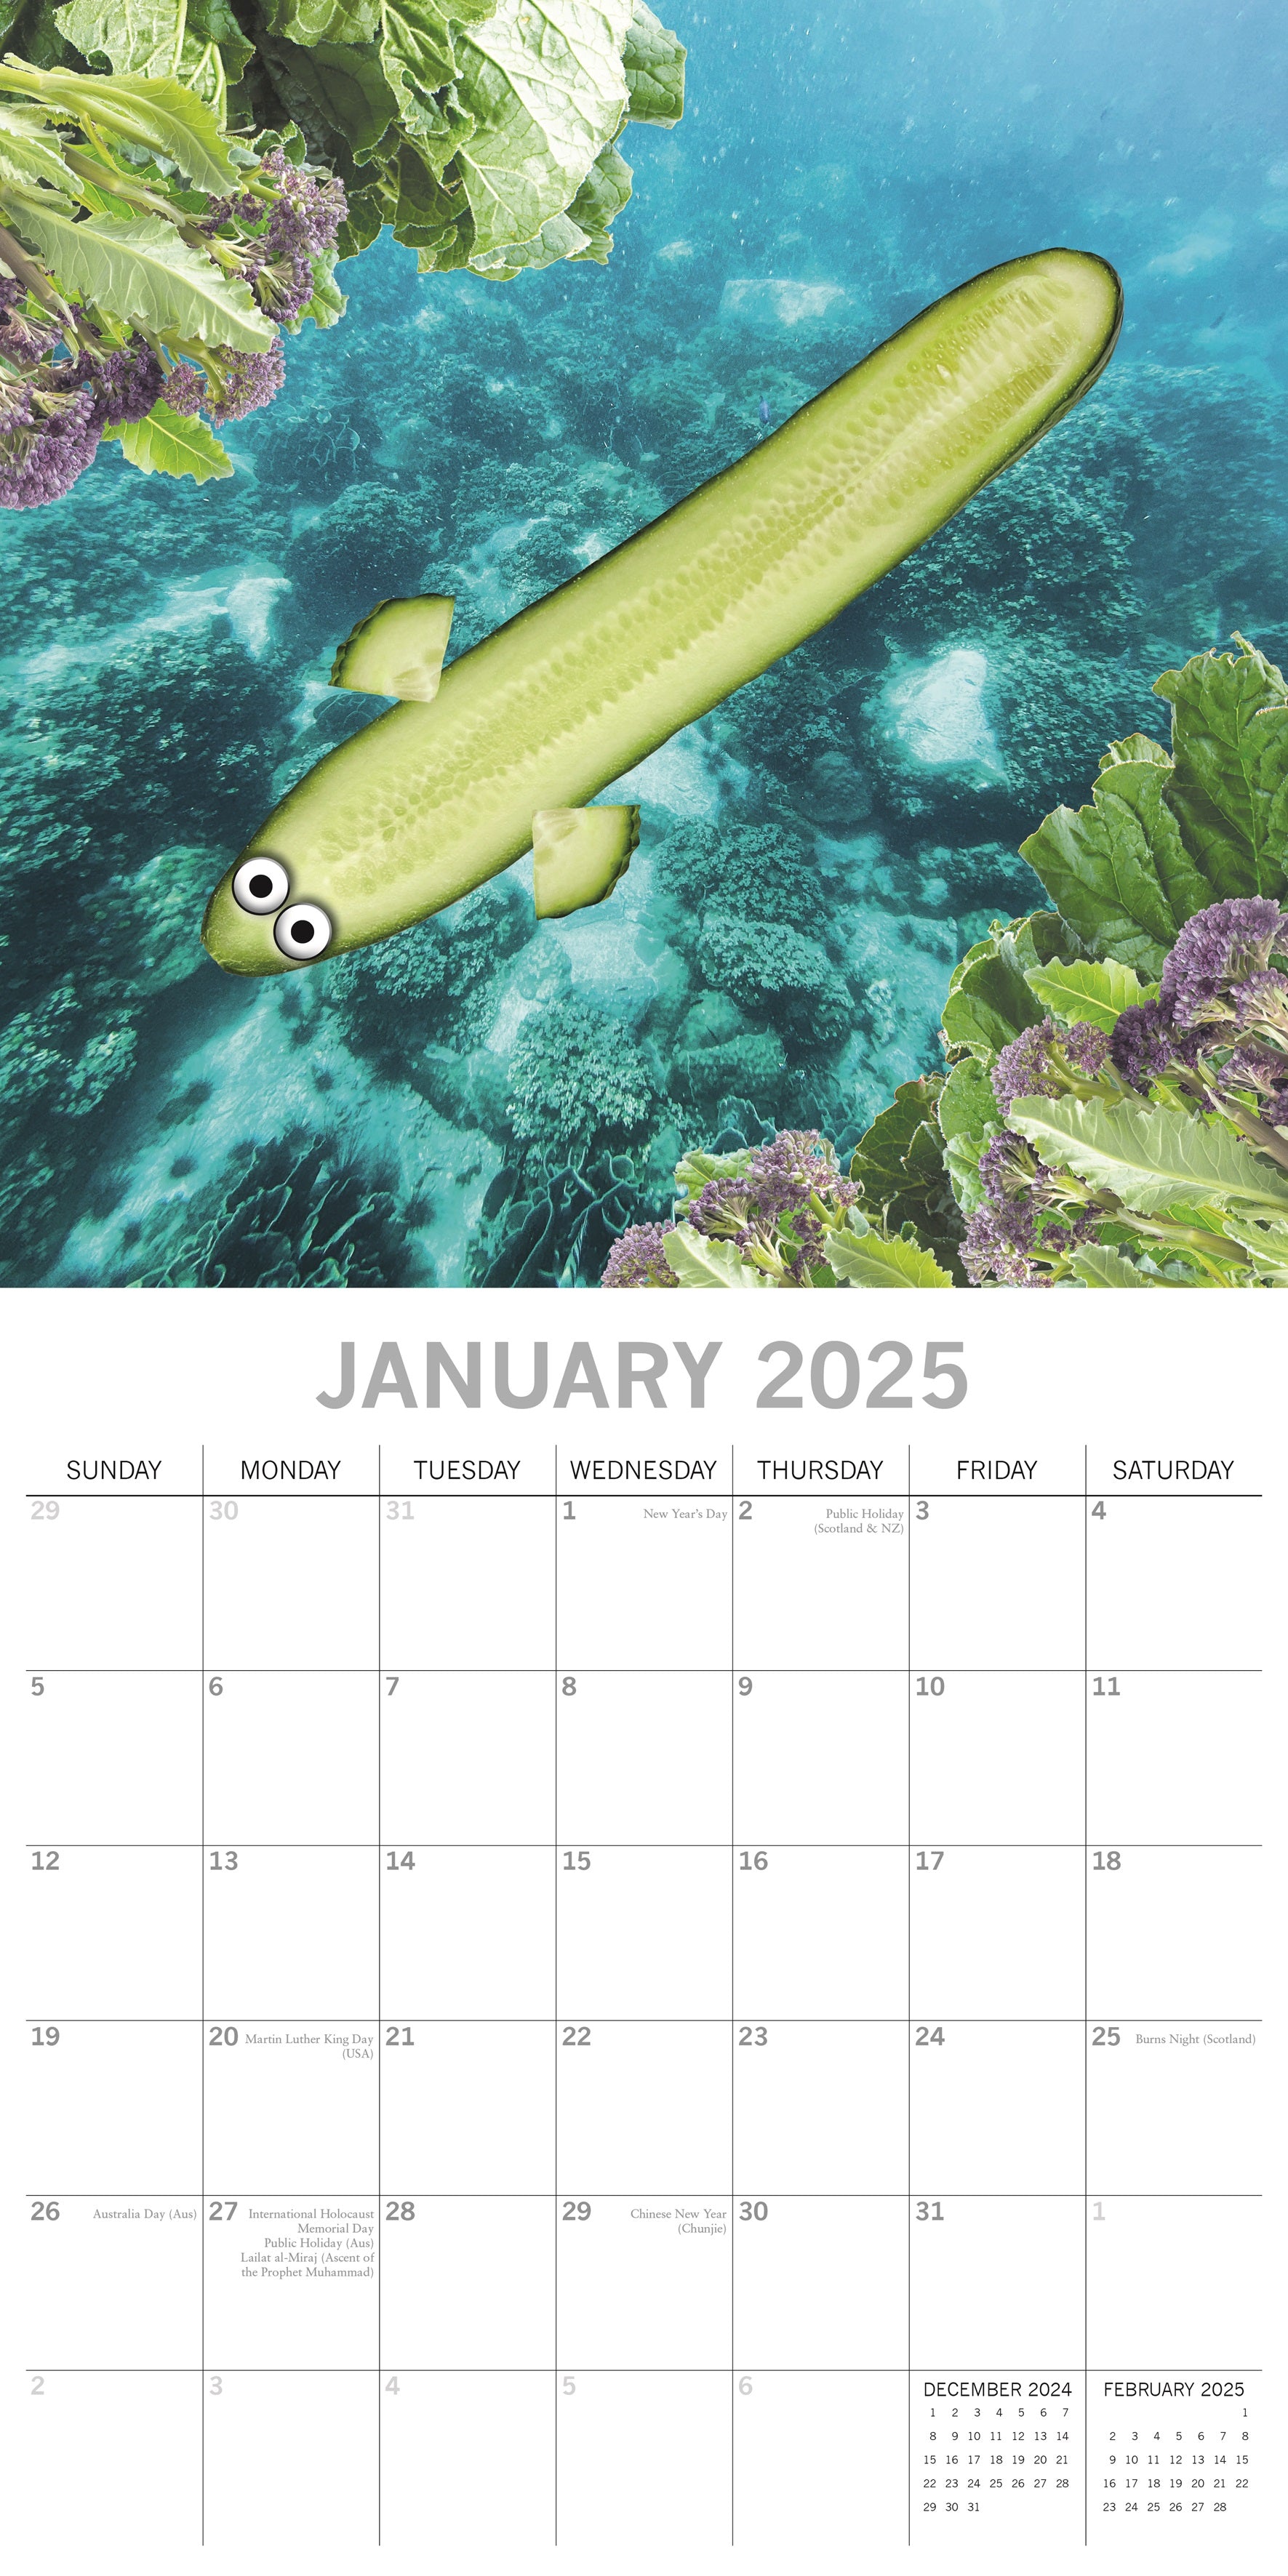 2025 Sea Food - Square Wall Calendar